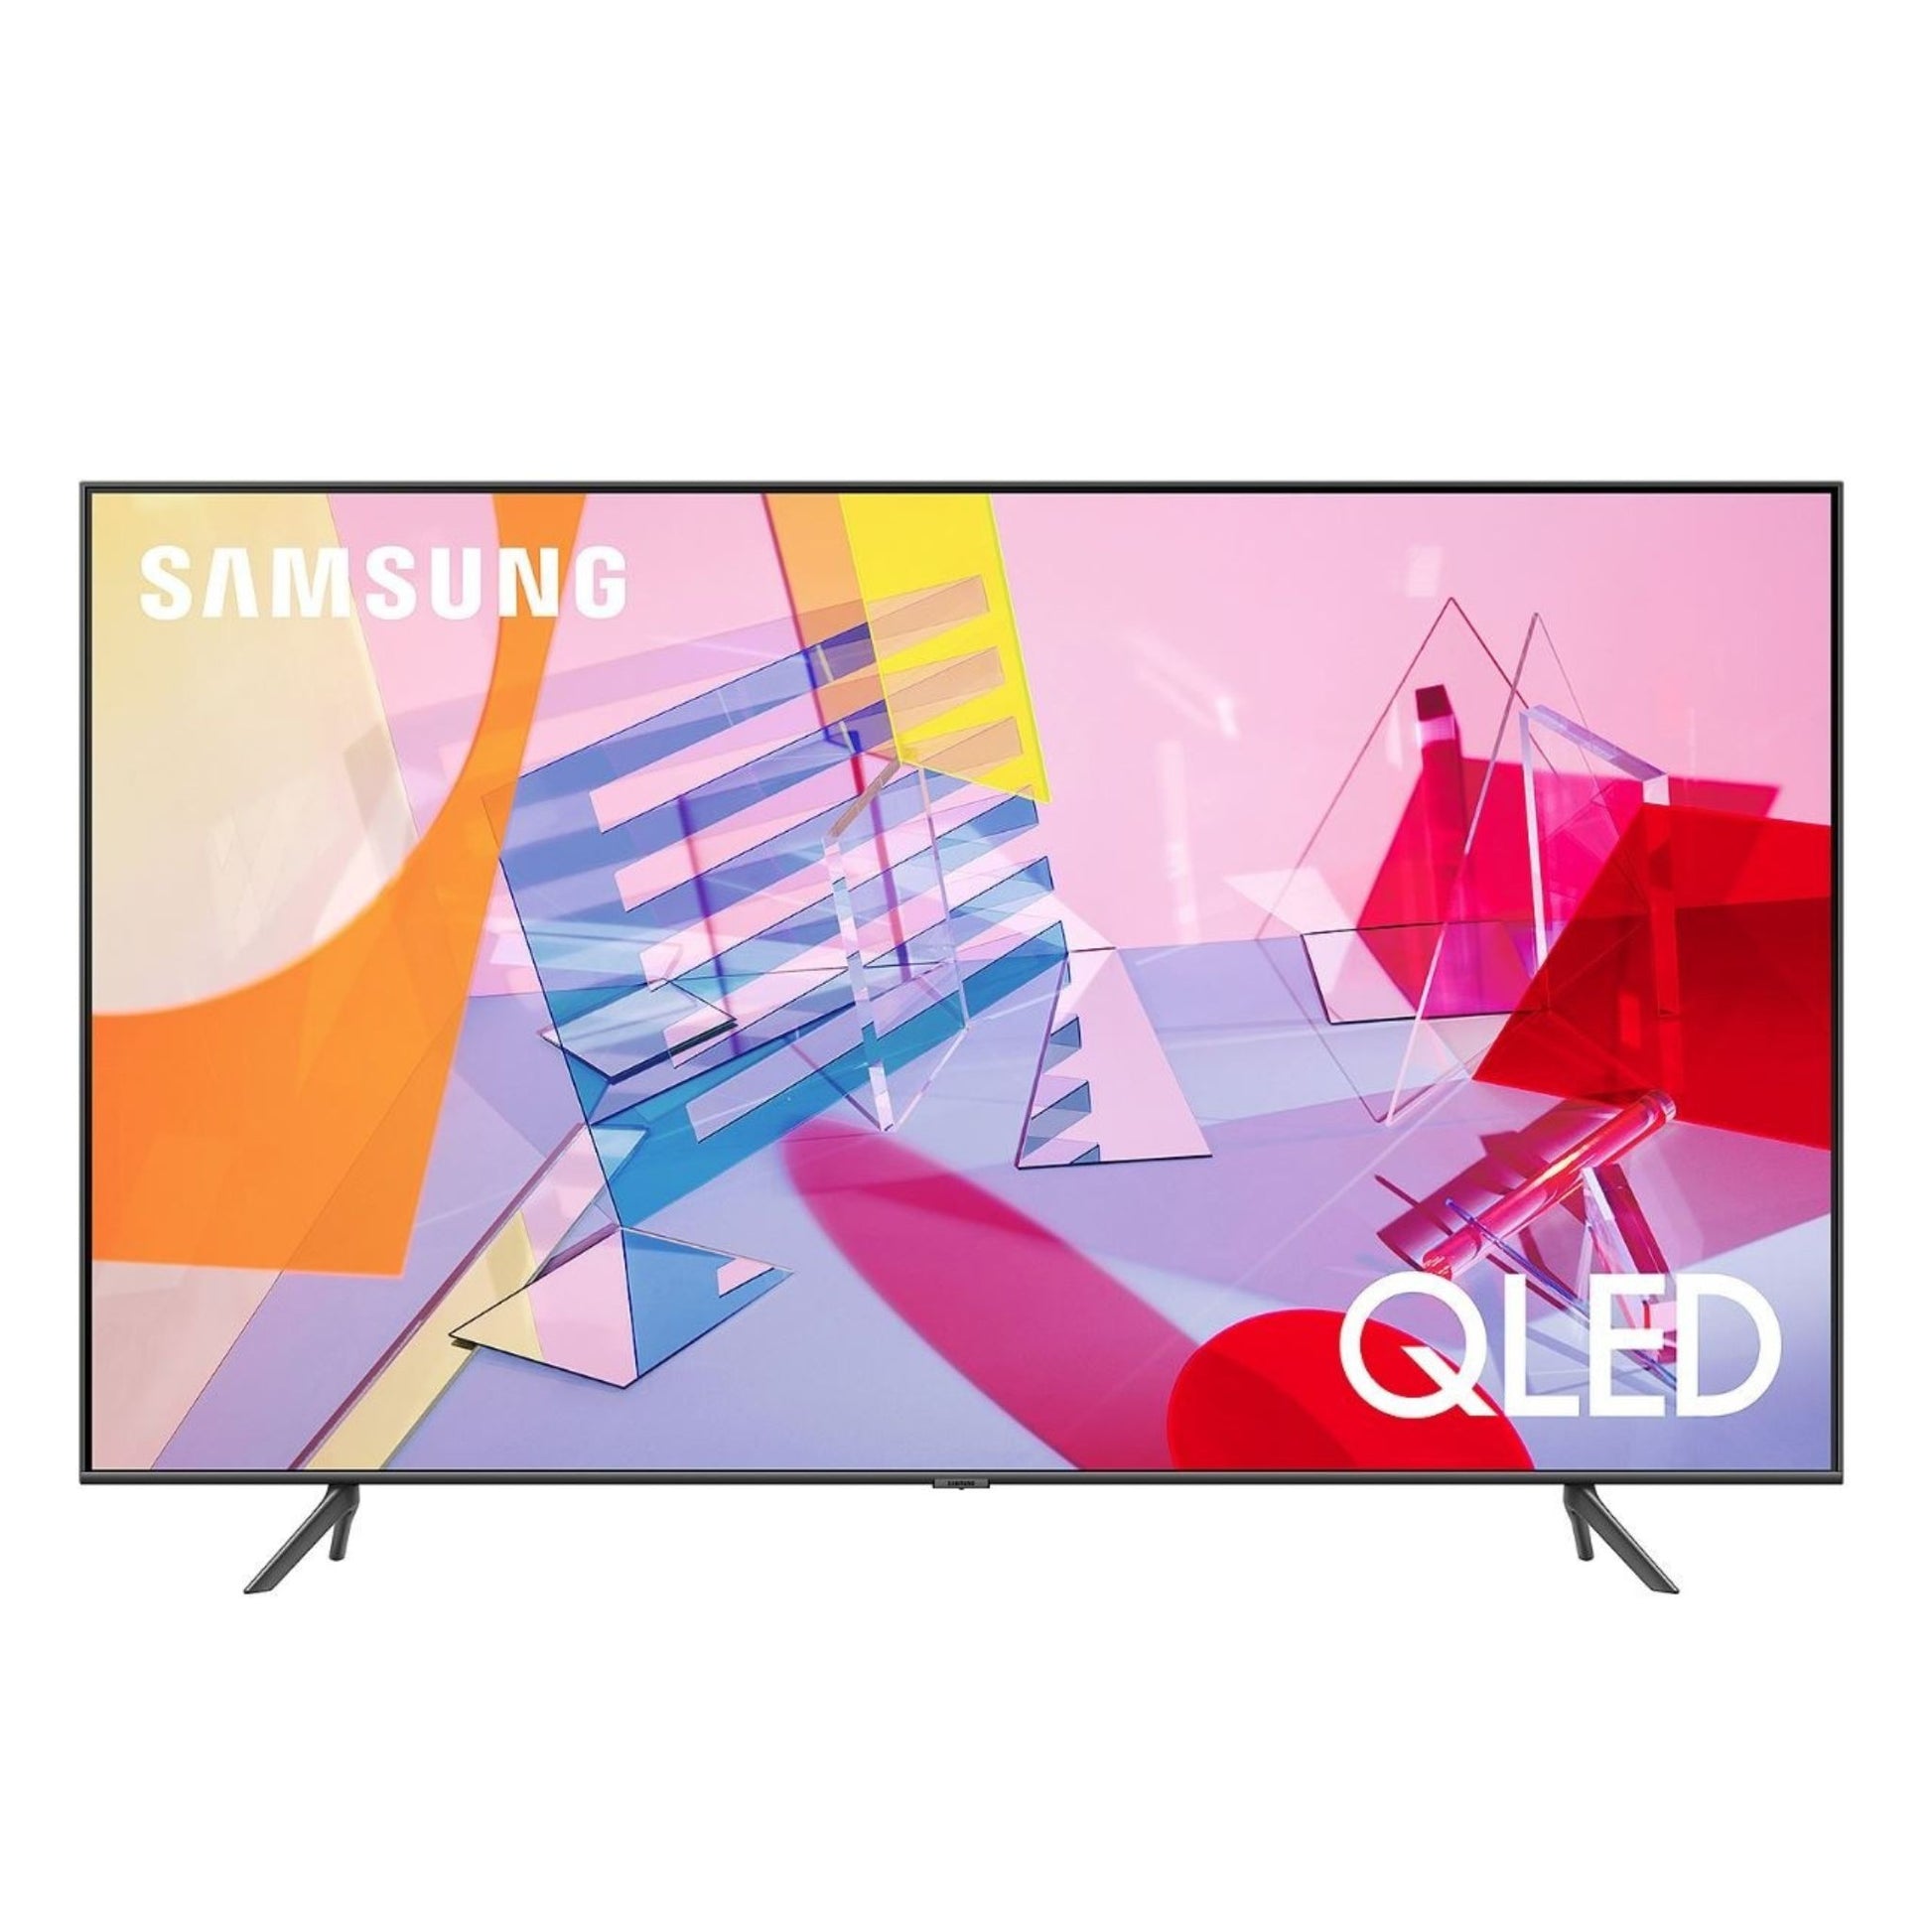 Samsung 58 inch Smart QLED TV, 58Q60T